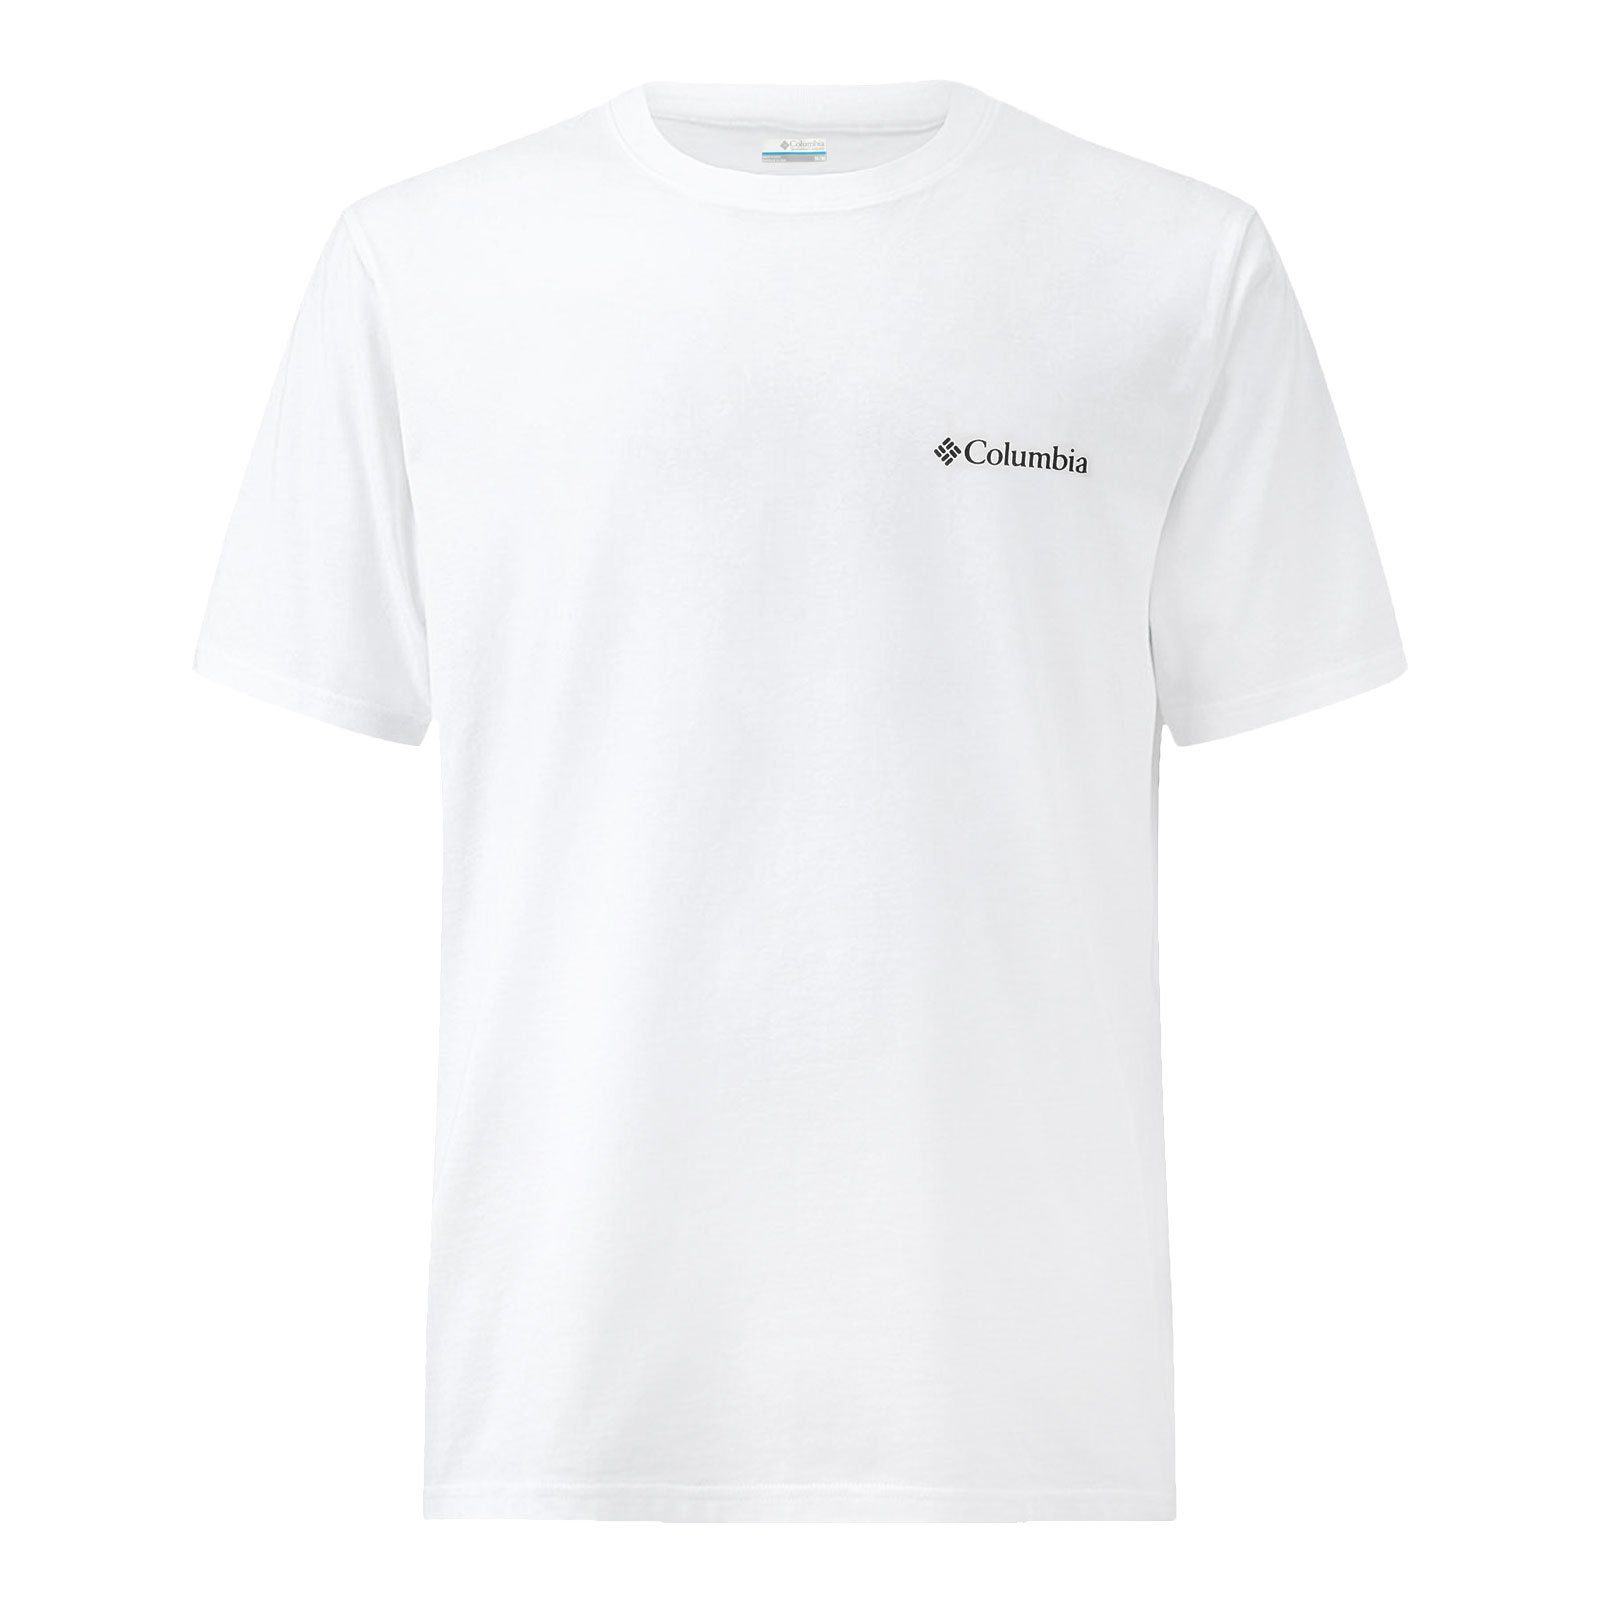 Back 101 white River™ Columbia Rundhalsausschnitt Rockaway mit Graphic T-Shirt Kurzarmshirt